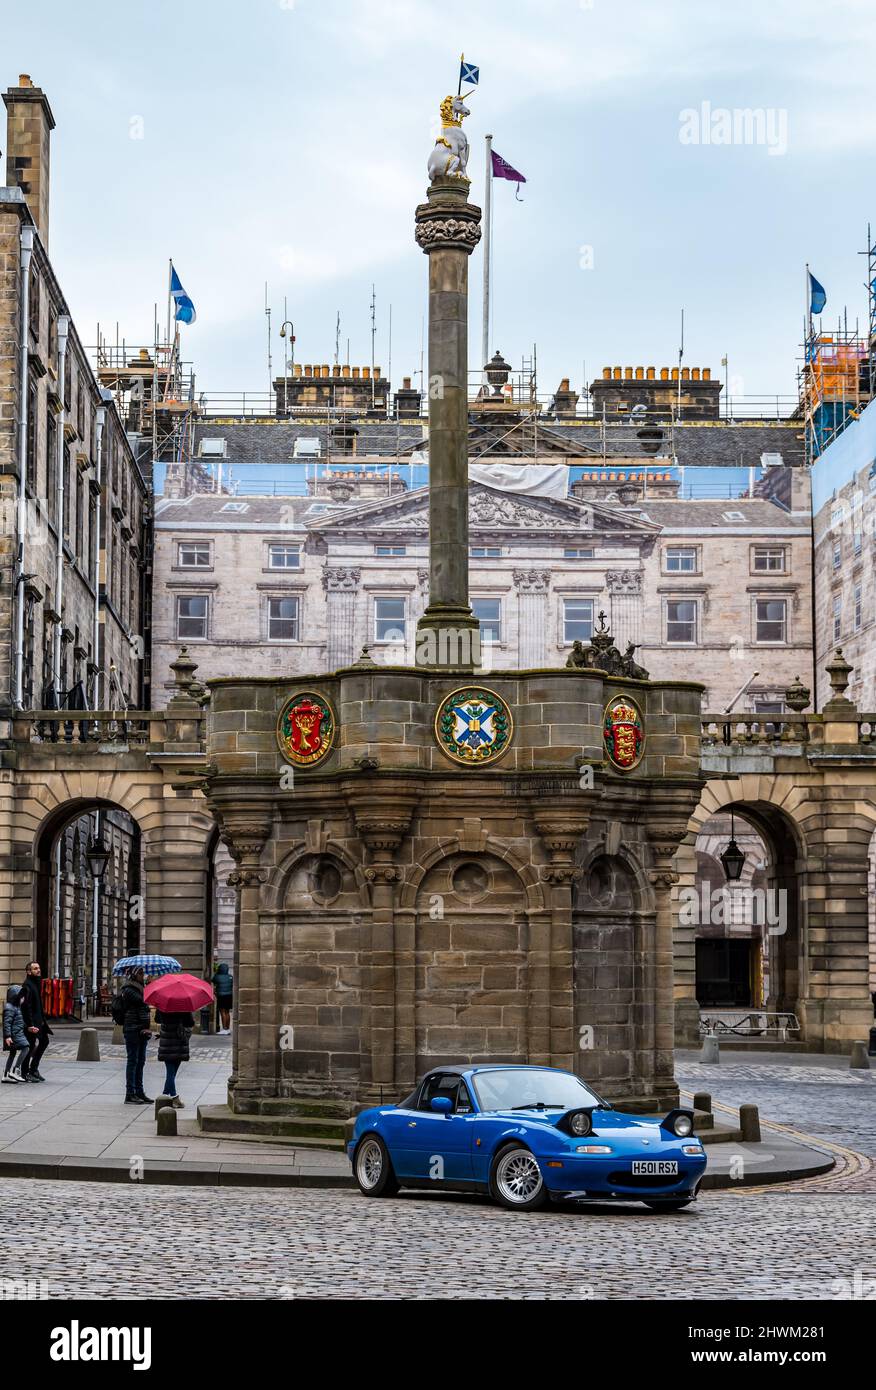 Mazda sports car parked by mercat or market cross with unicorn, Royal Mile, Edinburgh, Scotland, UK Stock Photo